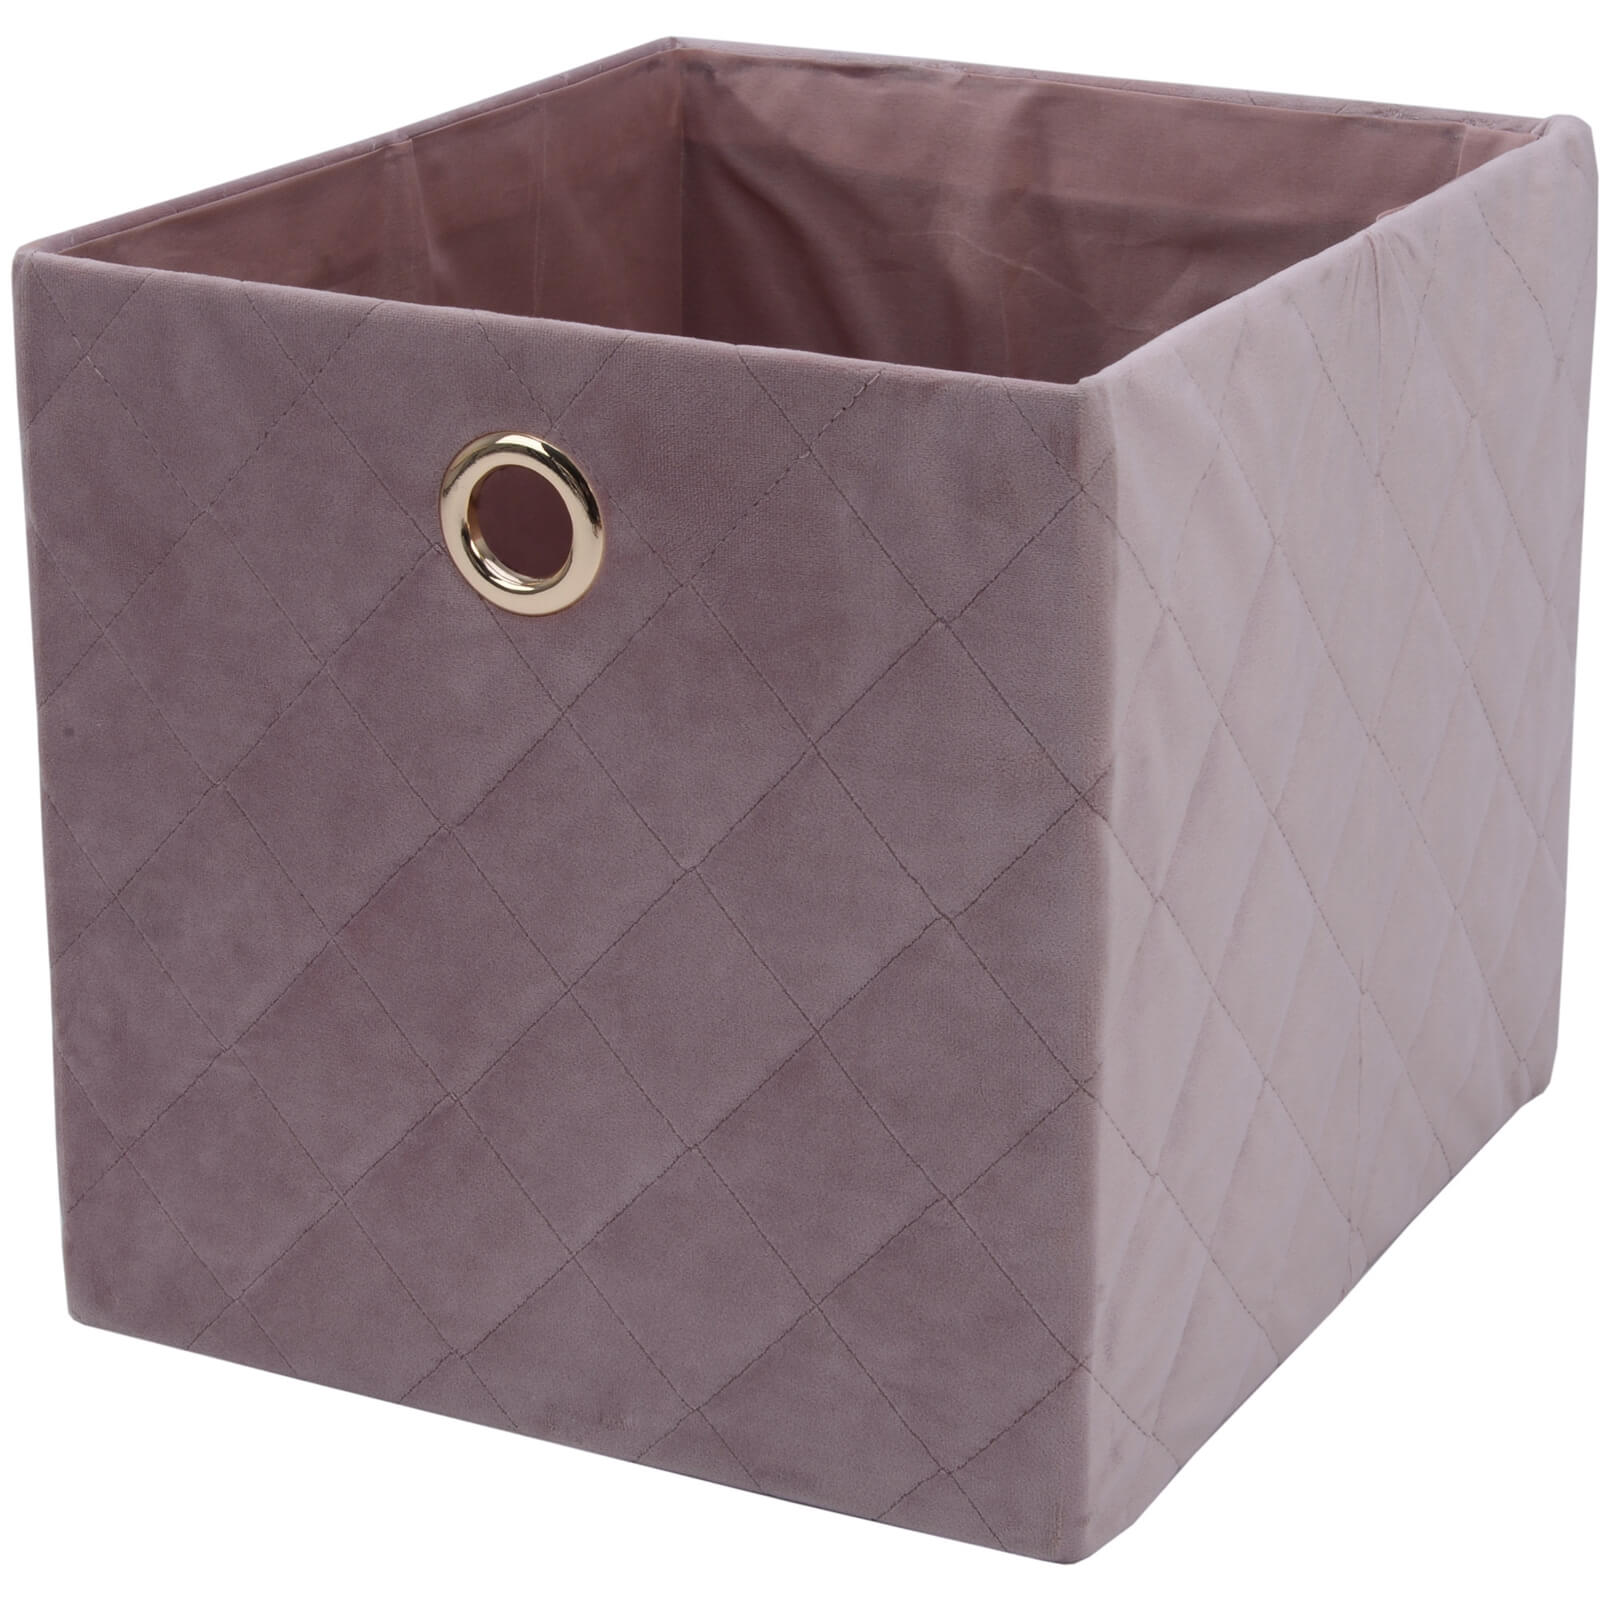 Premium Clever Cube Quilted Velvet Insert - Blush